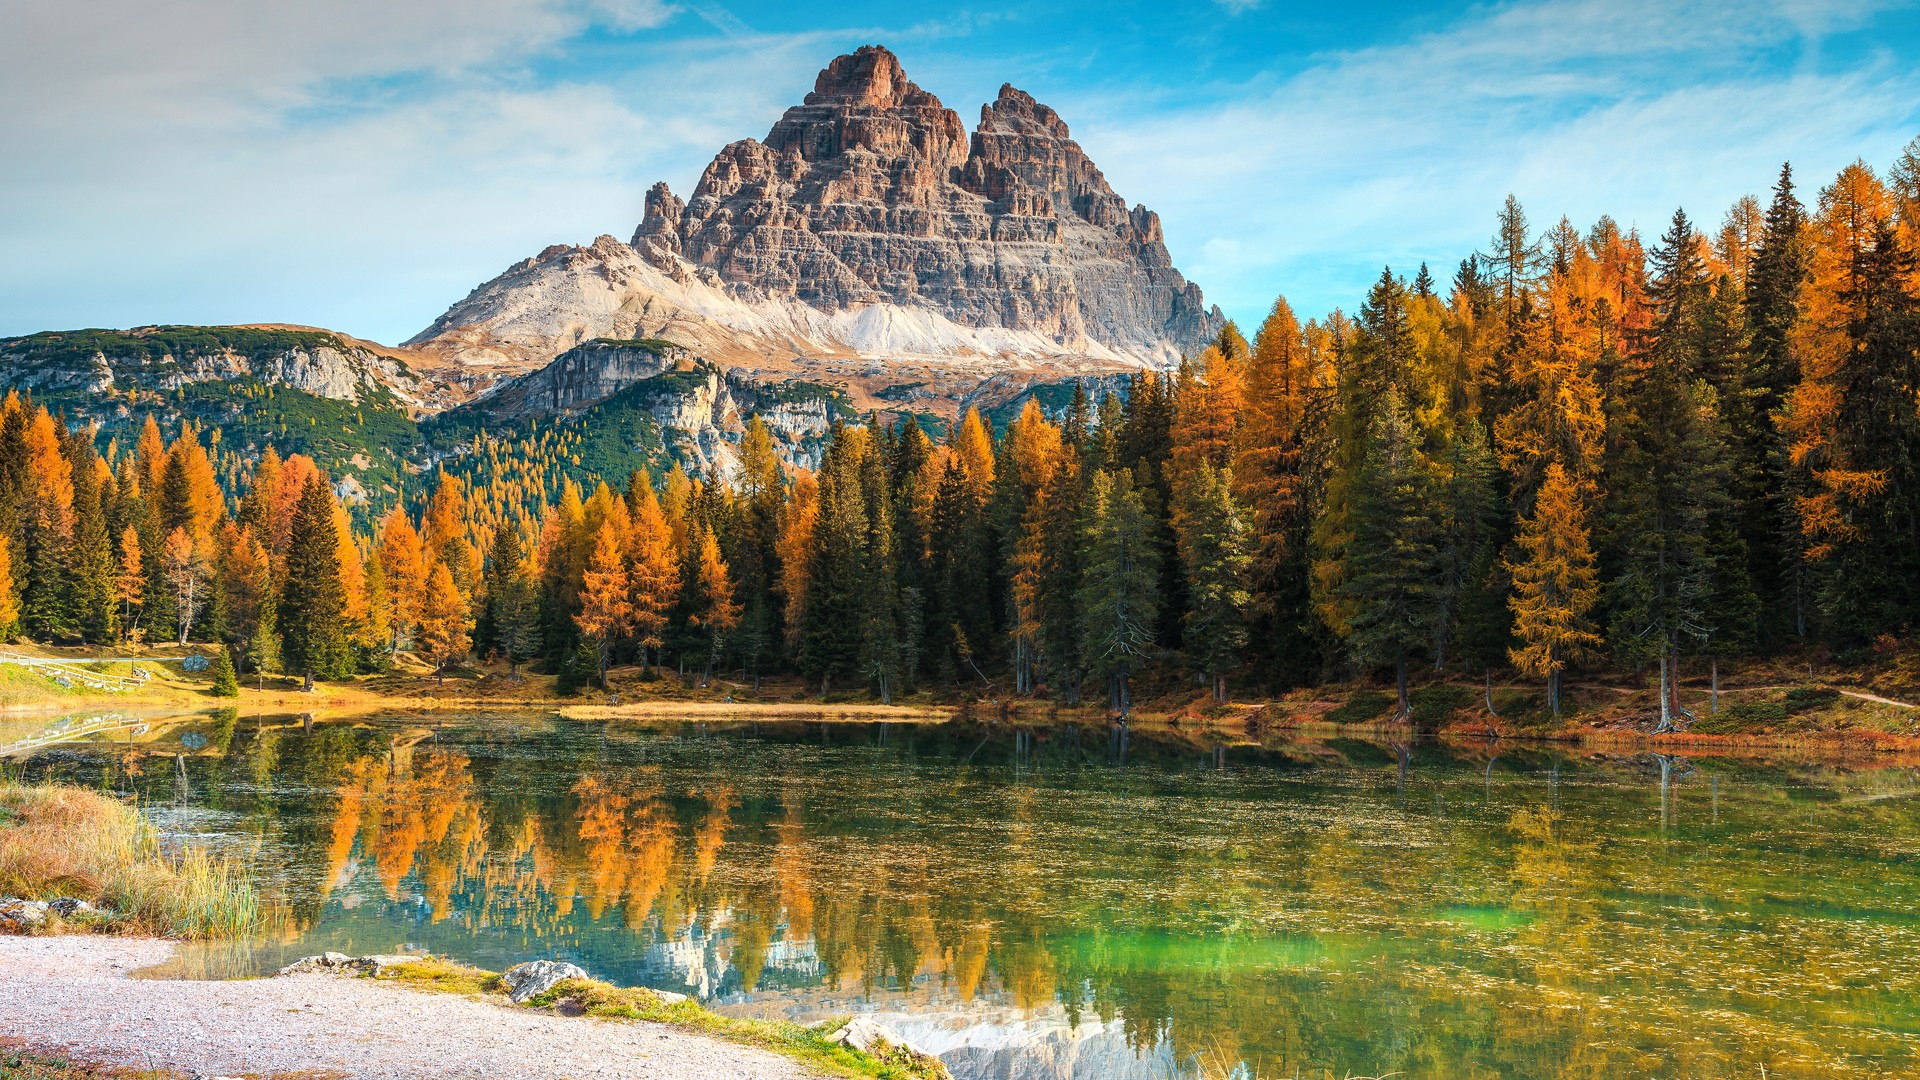 Antorno lake with famous Tre Cime di Lavaredo peaks in autumn, Dolomites, Italy | Windows 10 Spotlight Images